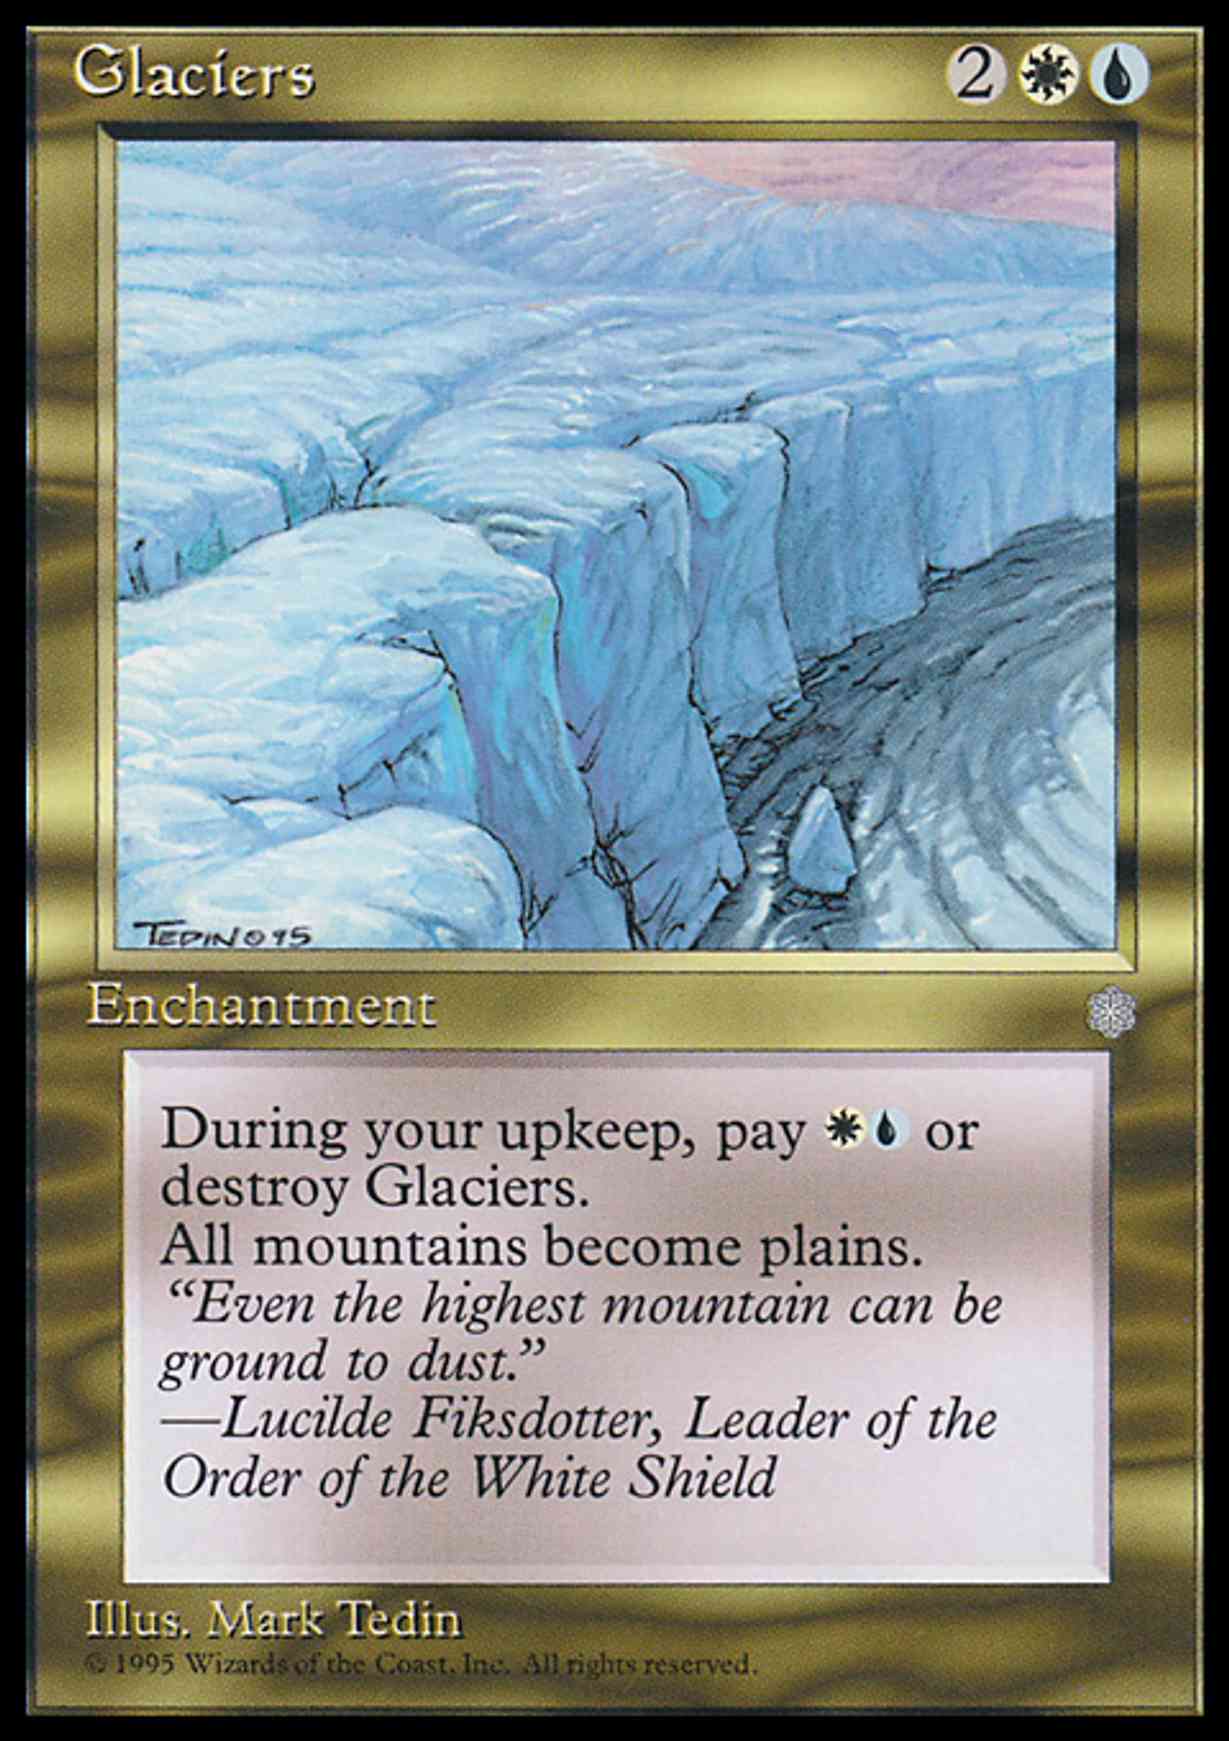 Glaciers magic card front